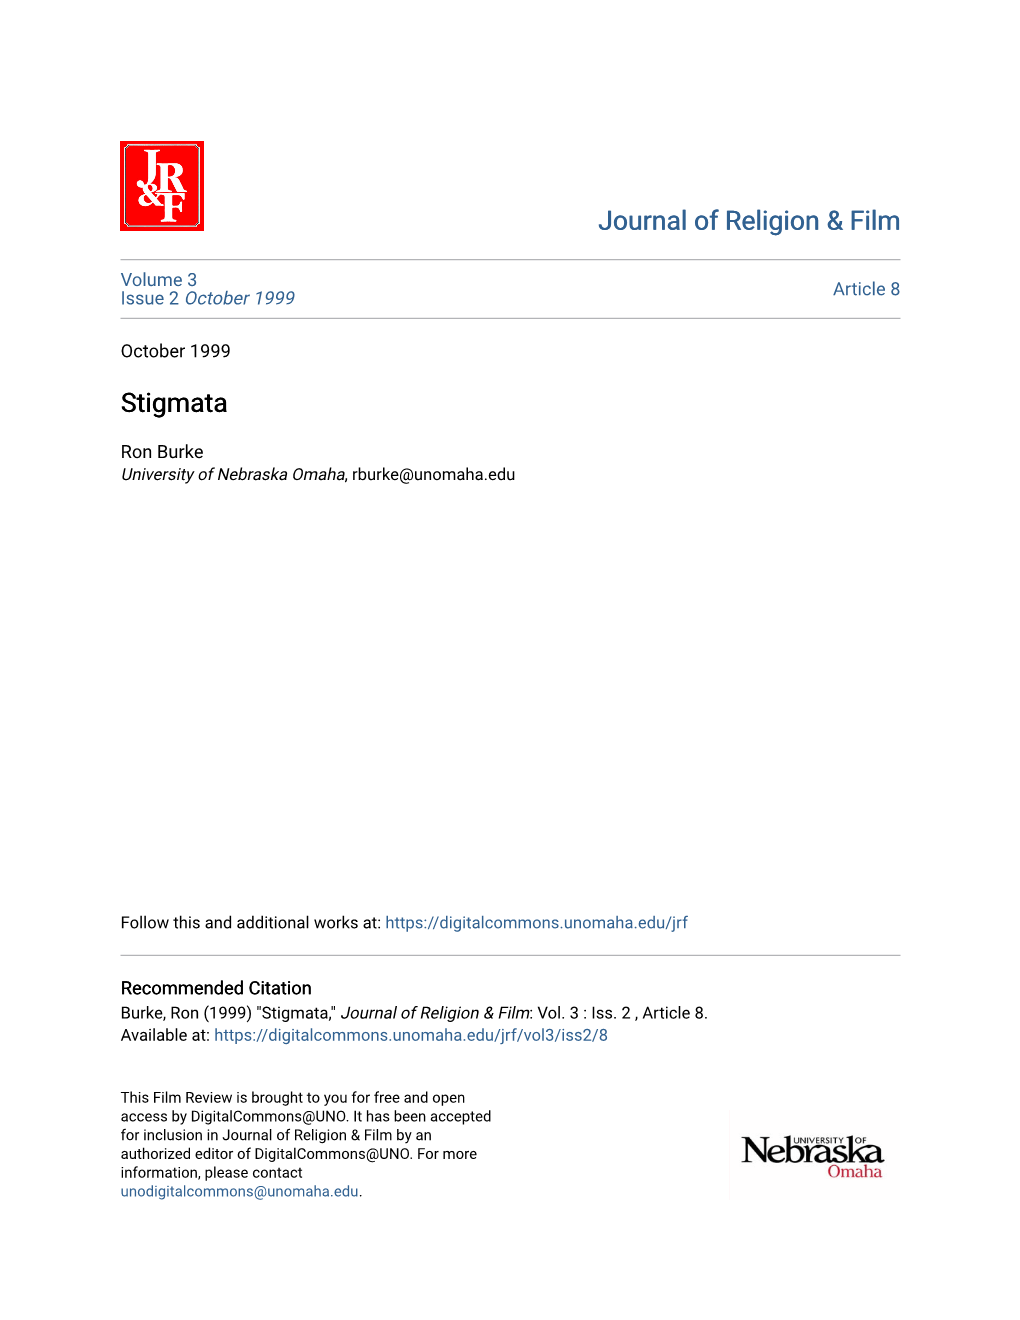 Journal of Religion & Film Stigmata